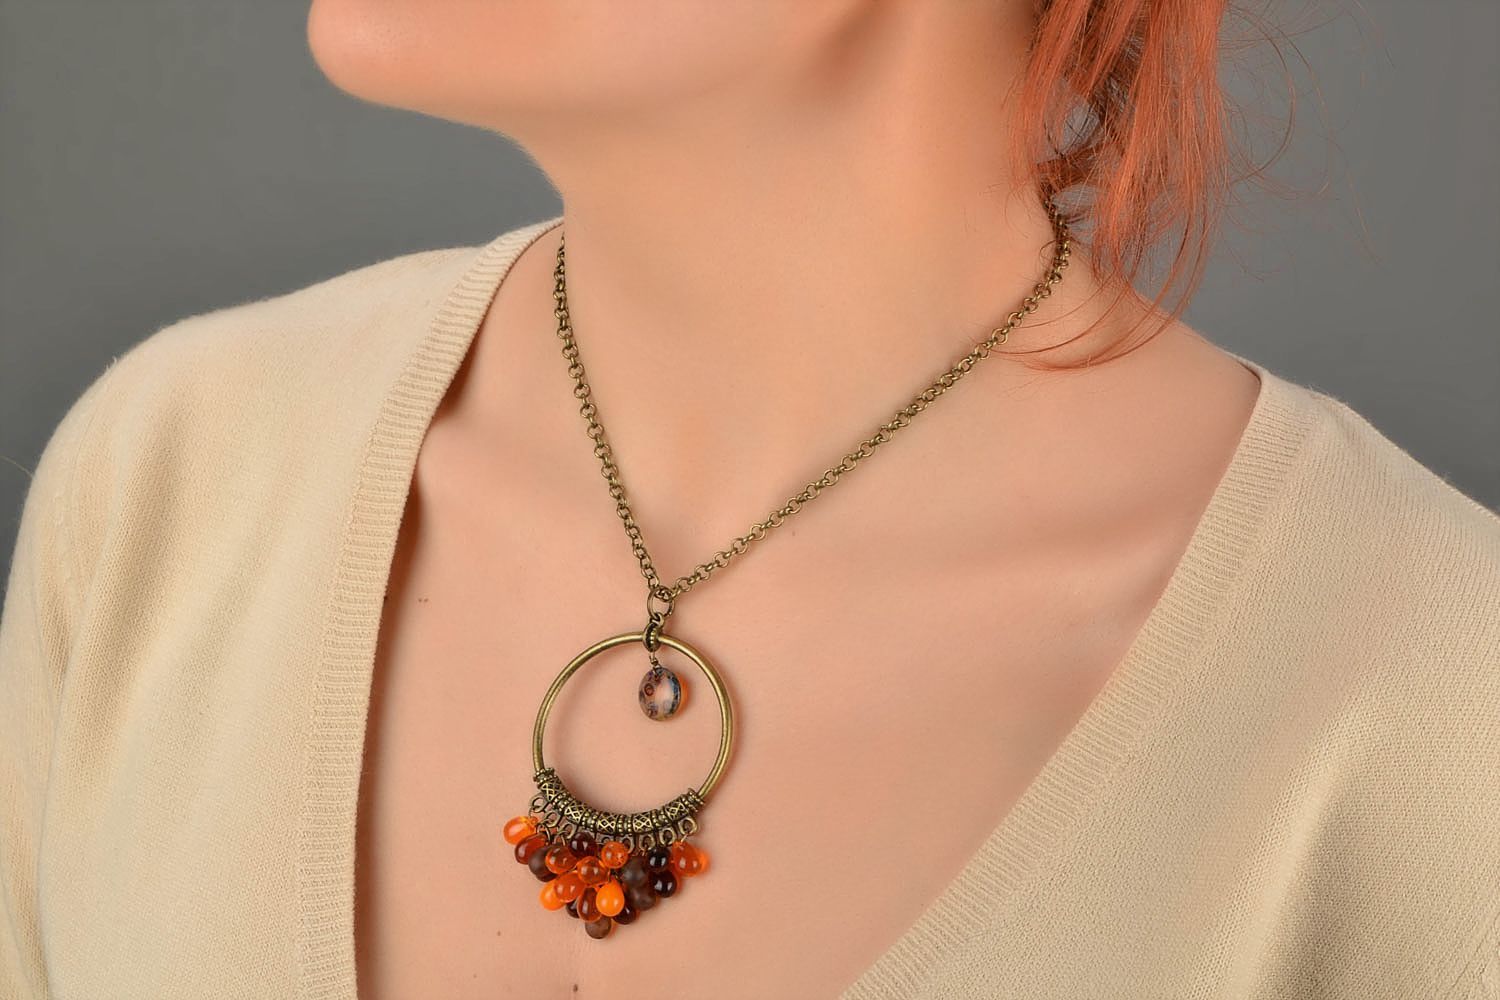 Handmade glass pendant with beads on a chain beautiful stylish designer jewelry photo 5